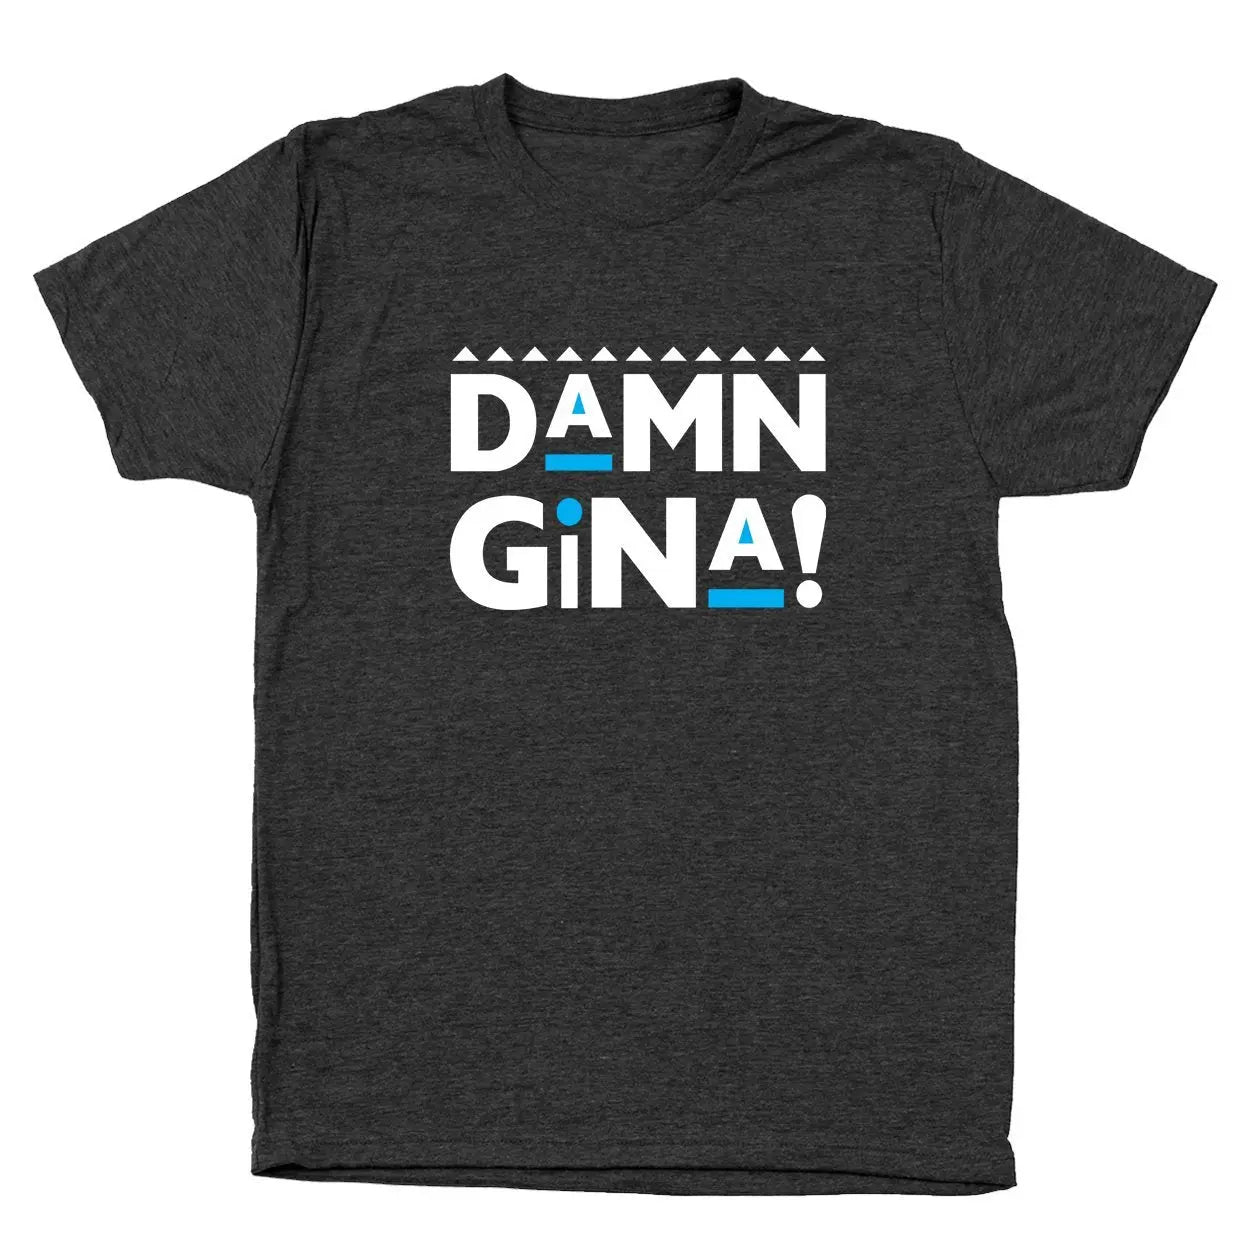 Damn Gina Tshirt - Donkey Tees